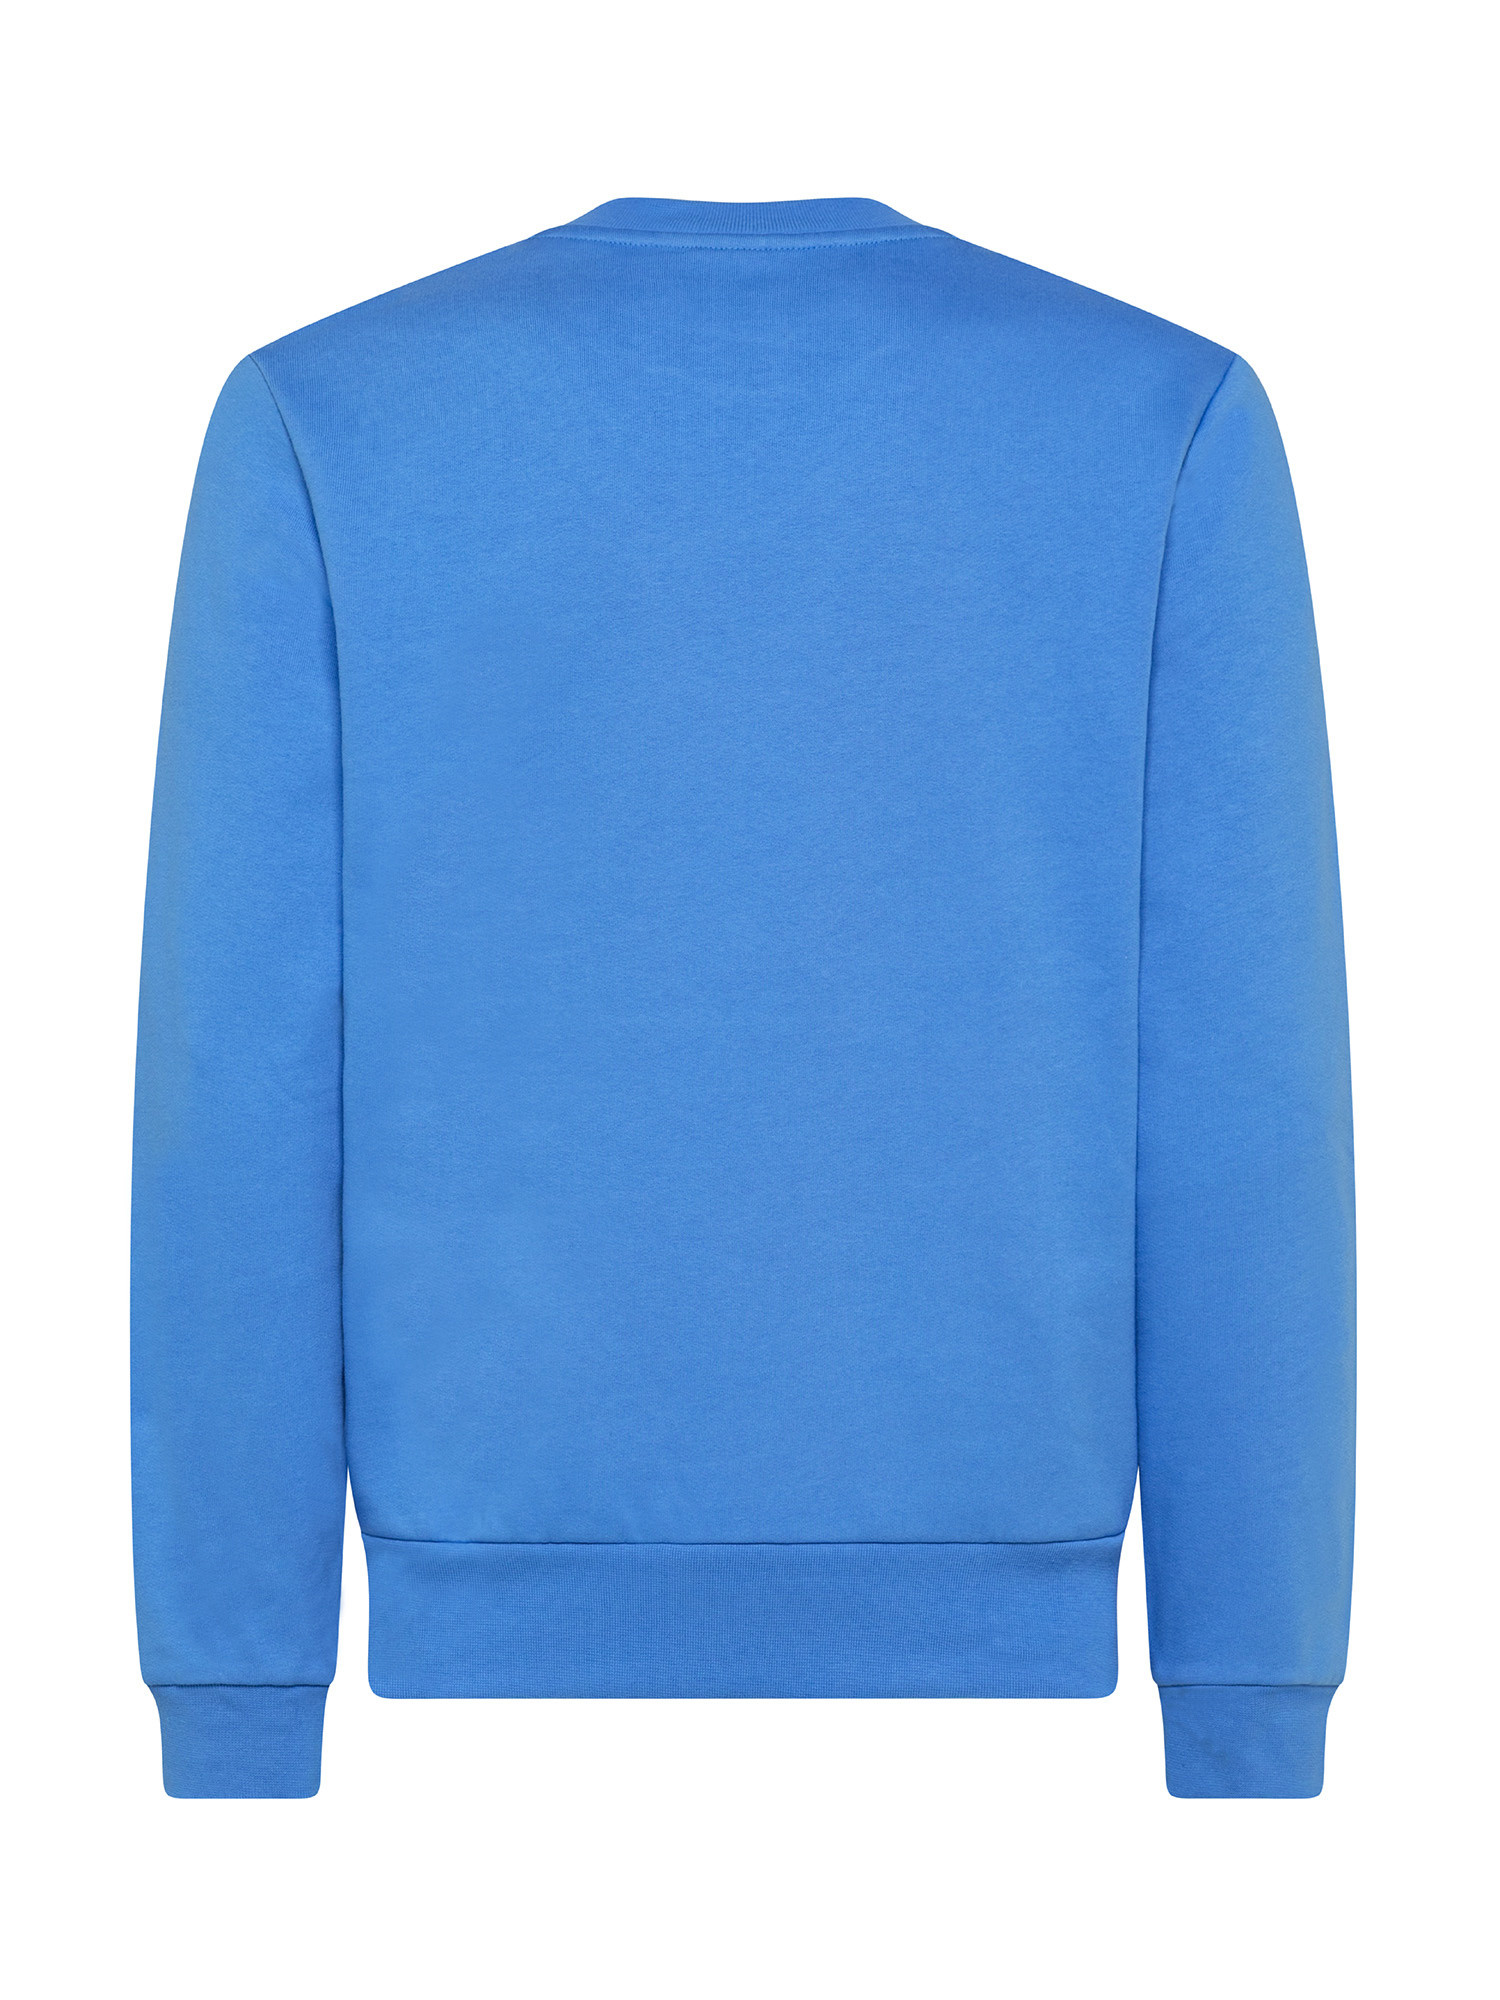 Lacoste - Sweatshirt in brushed organic cotton, Light Blue, large image number 1